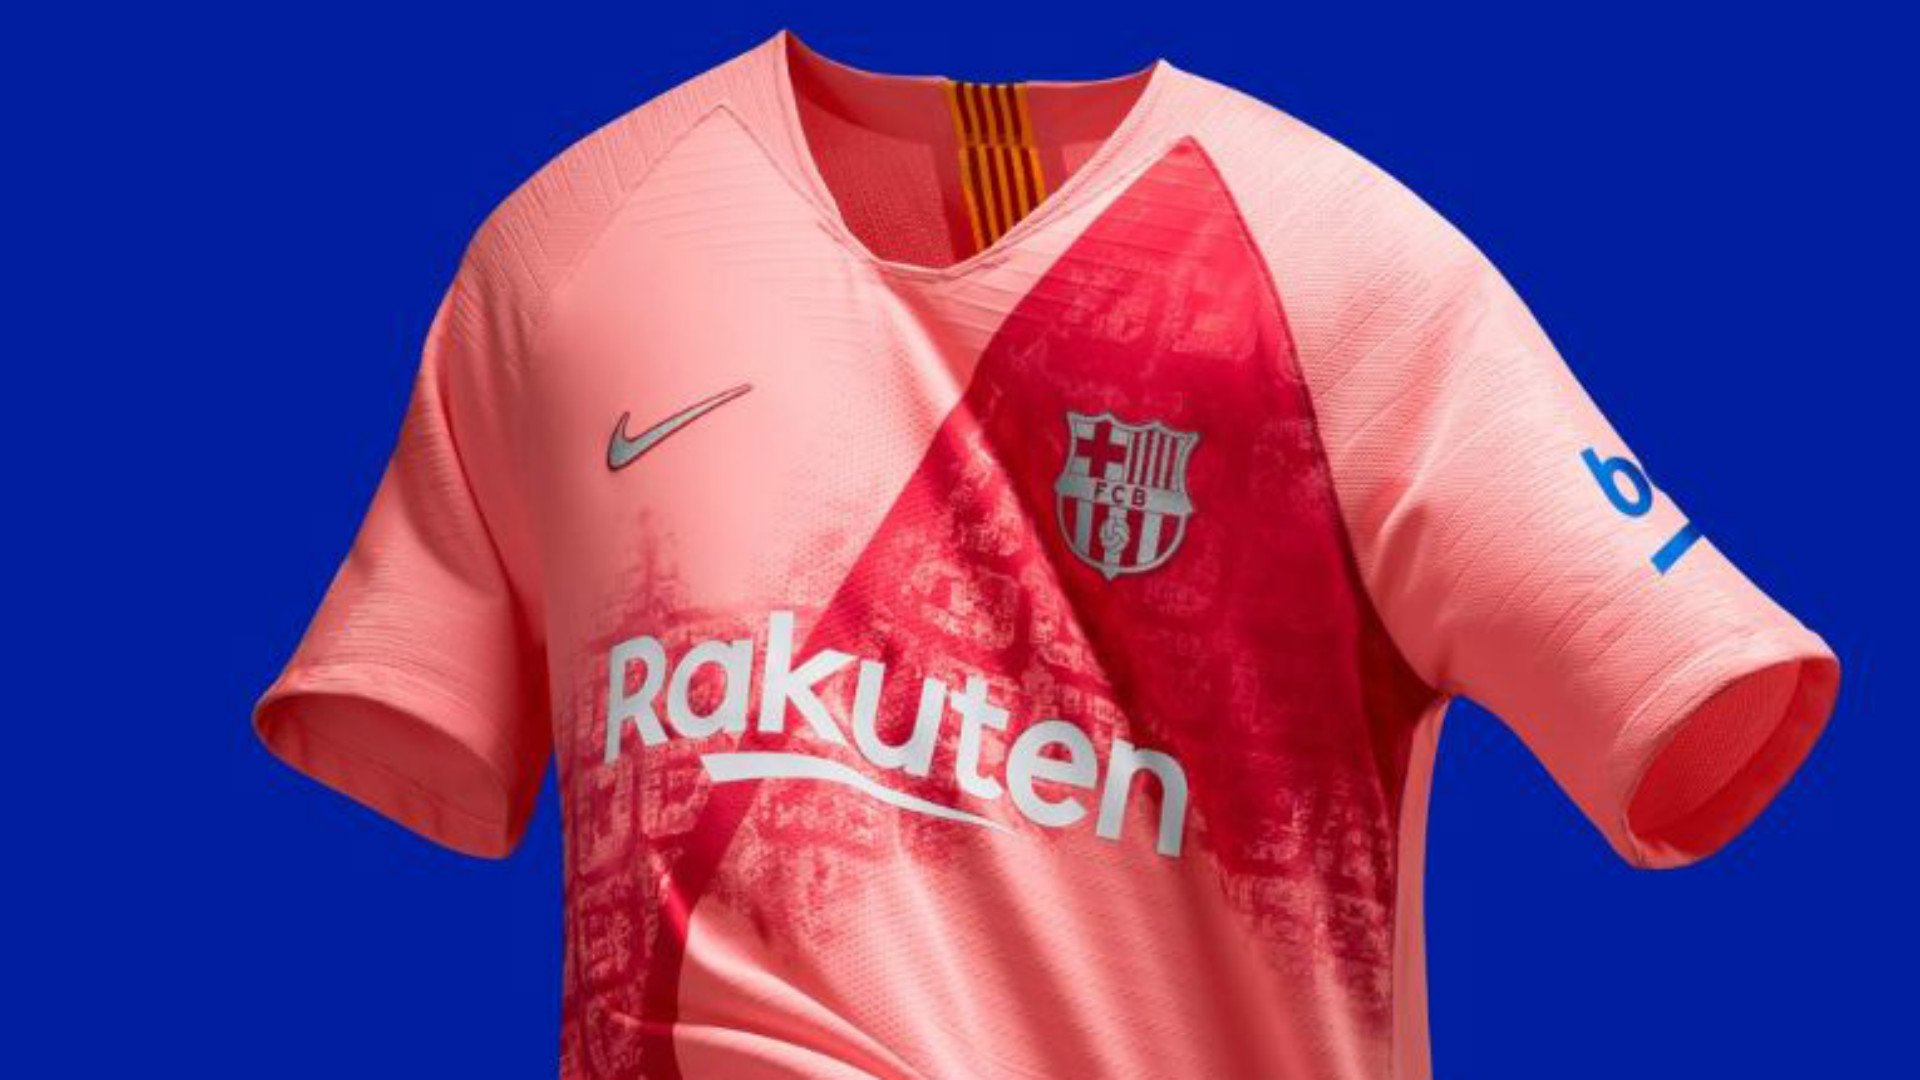 Herformuleren Nieuwe aankomst Fantasie Barcelona news: Barca unveil new pink third kit | Goal.com